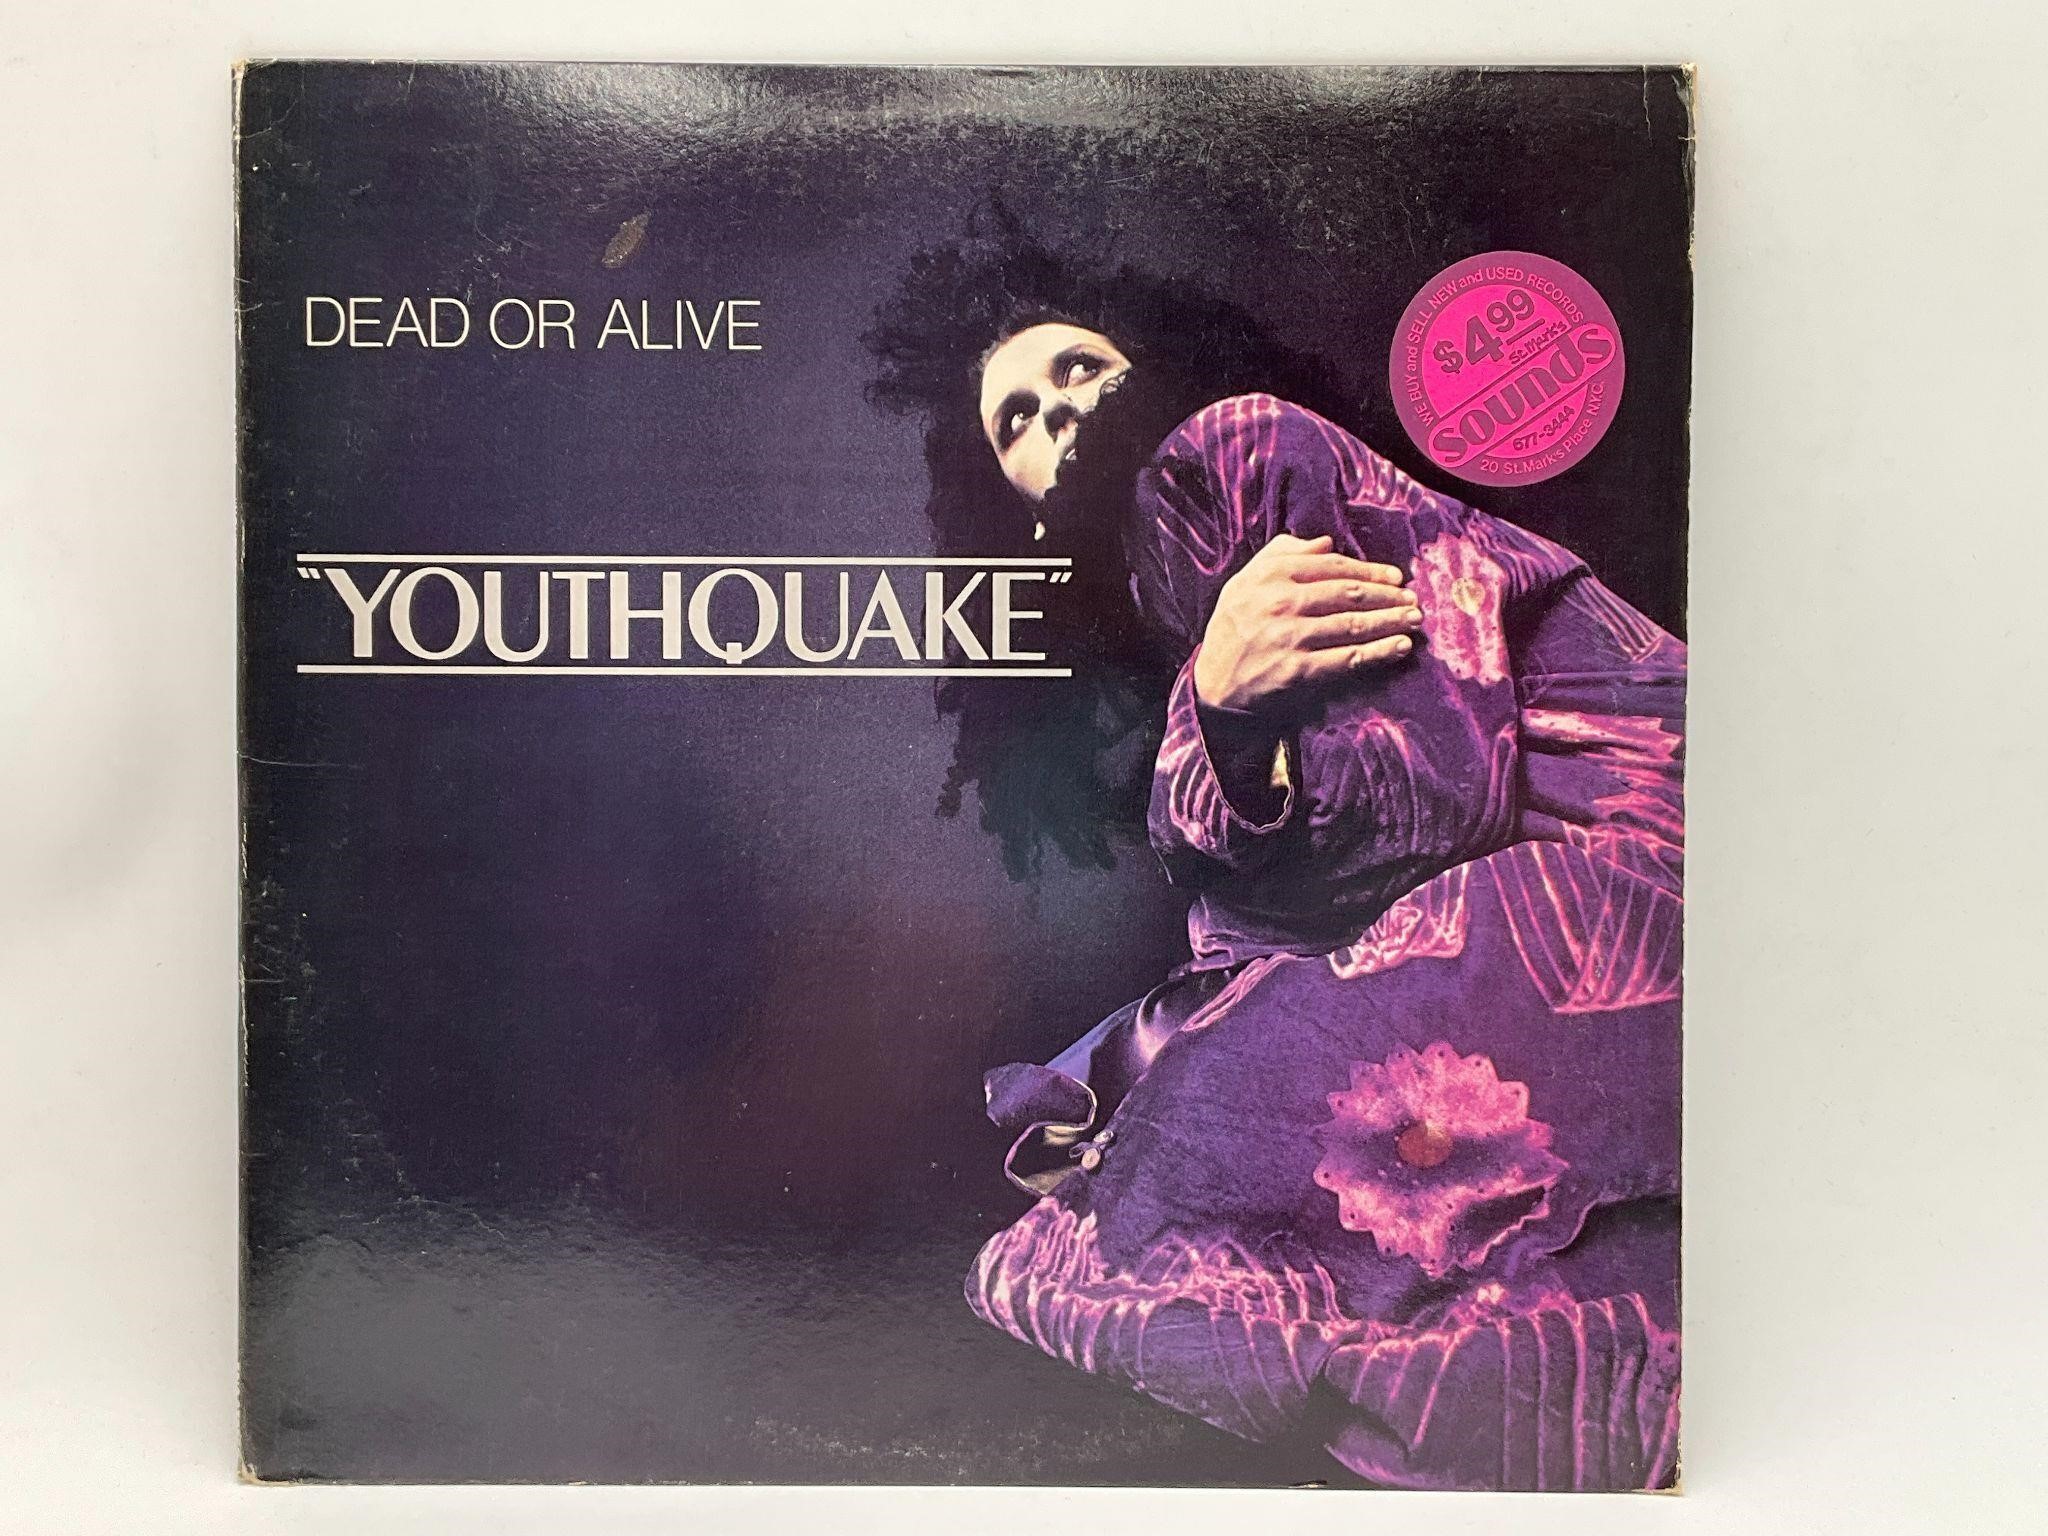 Dead Or Alive "Youthquake" Pop Rock LP Album